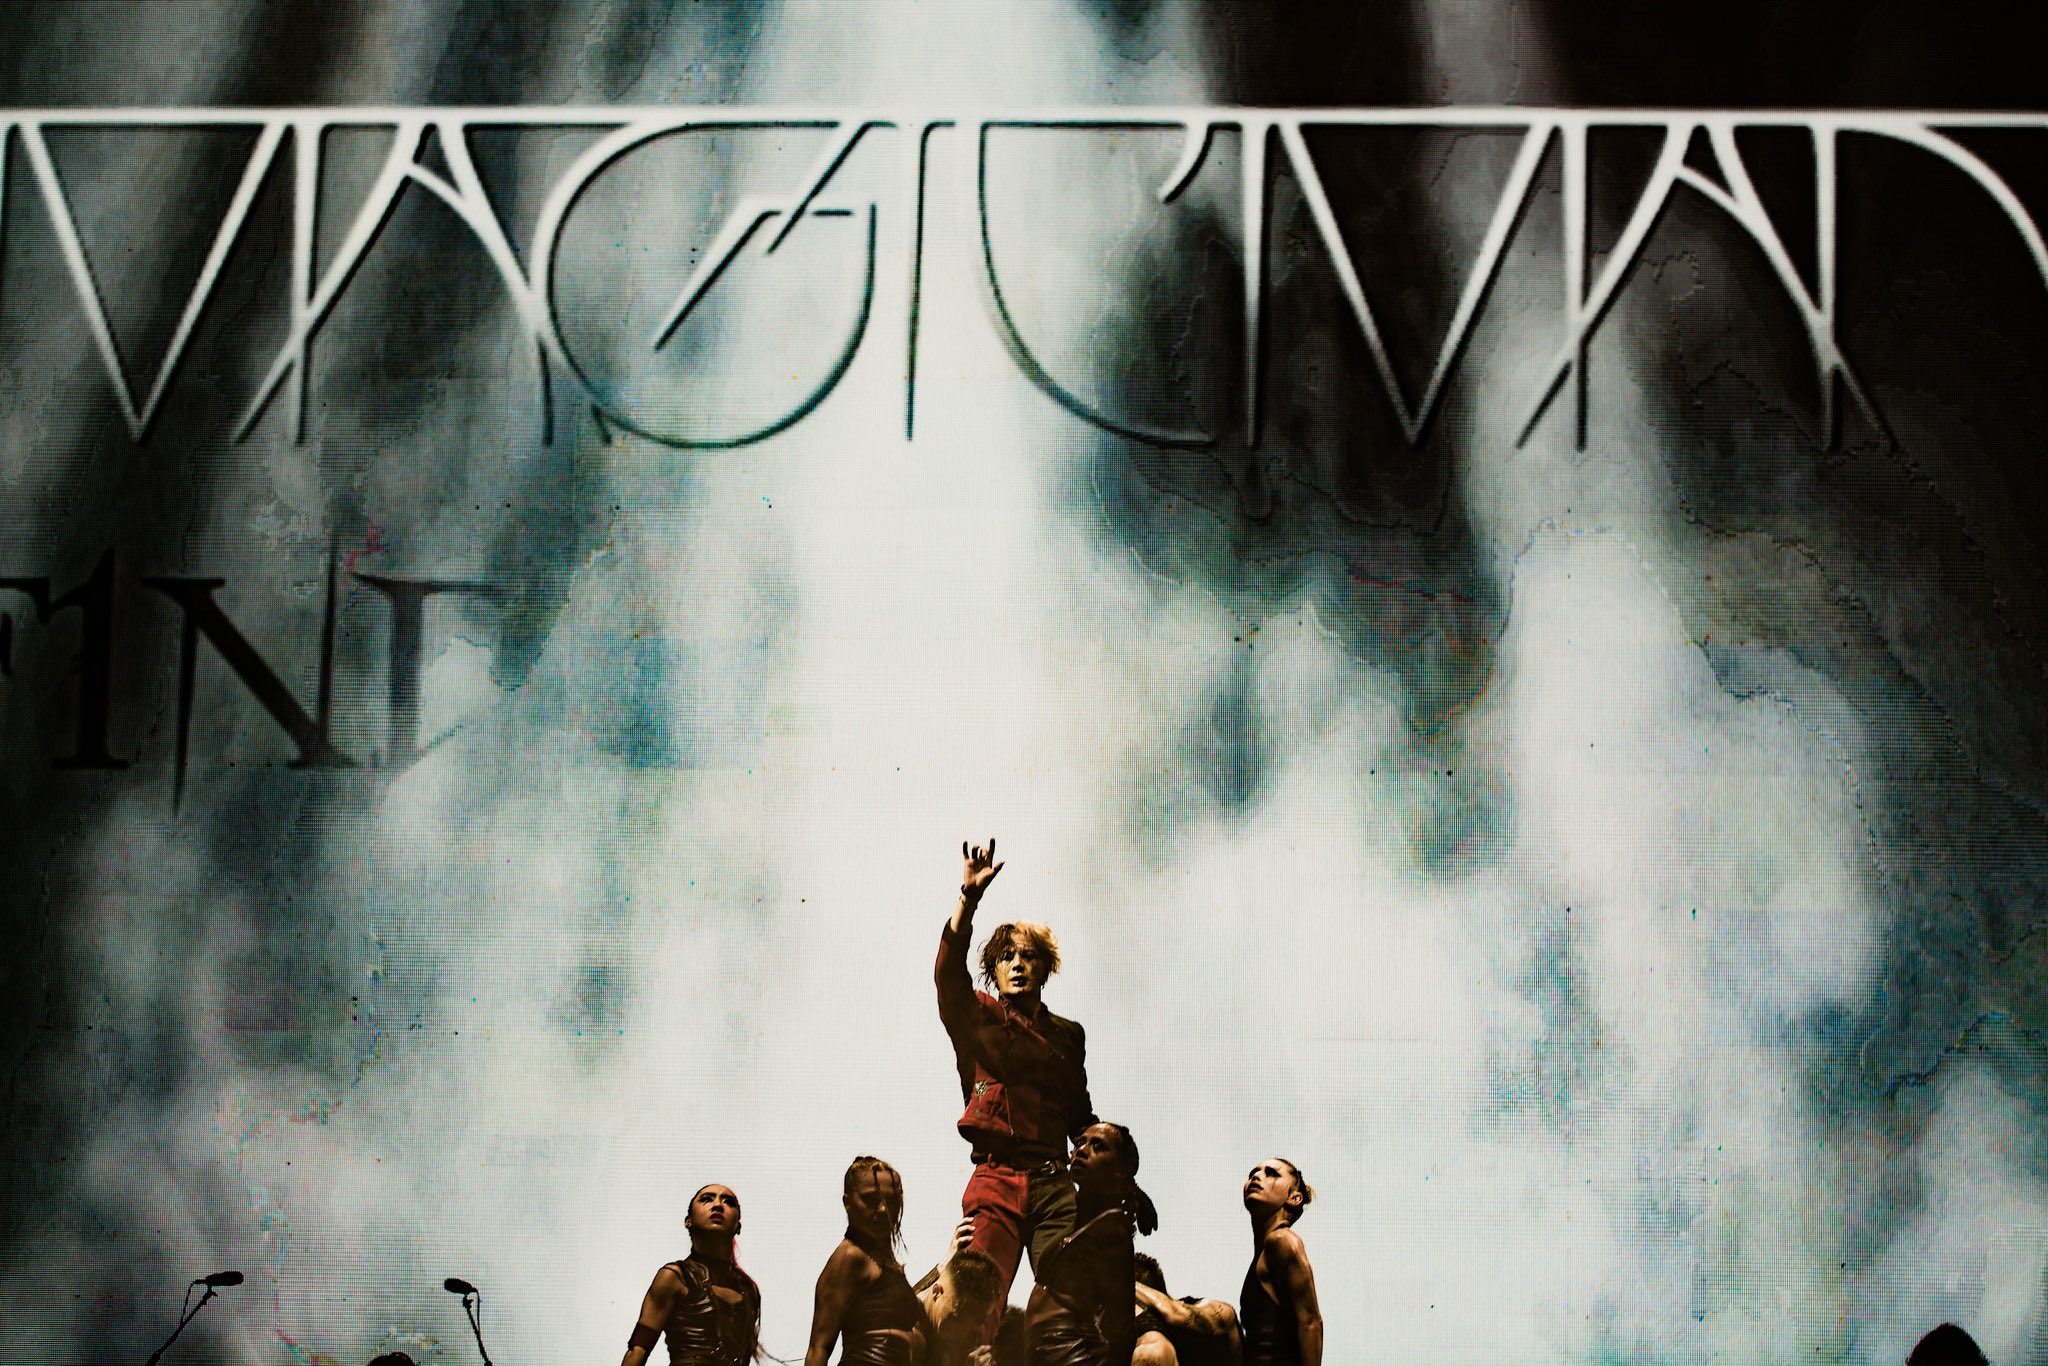 TEAM WANG records on X: “Cruel” Behind The Scenes. MAGICMAN album on  Sept.9th. .  MV👇  . PLATFORM LINK👇   . PRE-ORDER MAGIC MAN album👇   . PRE-SAVE MAGIC MAN album👇